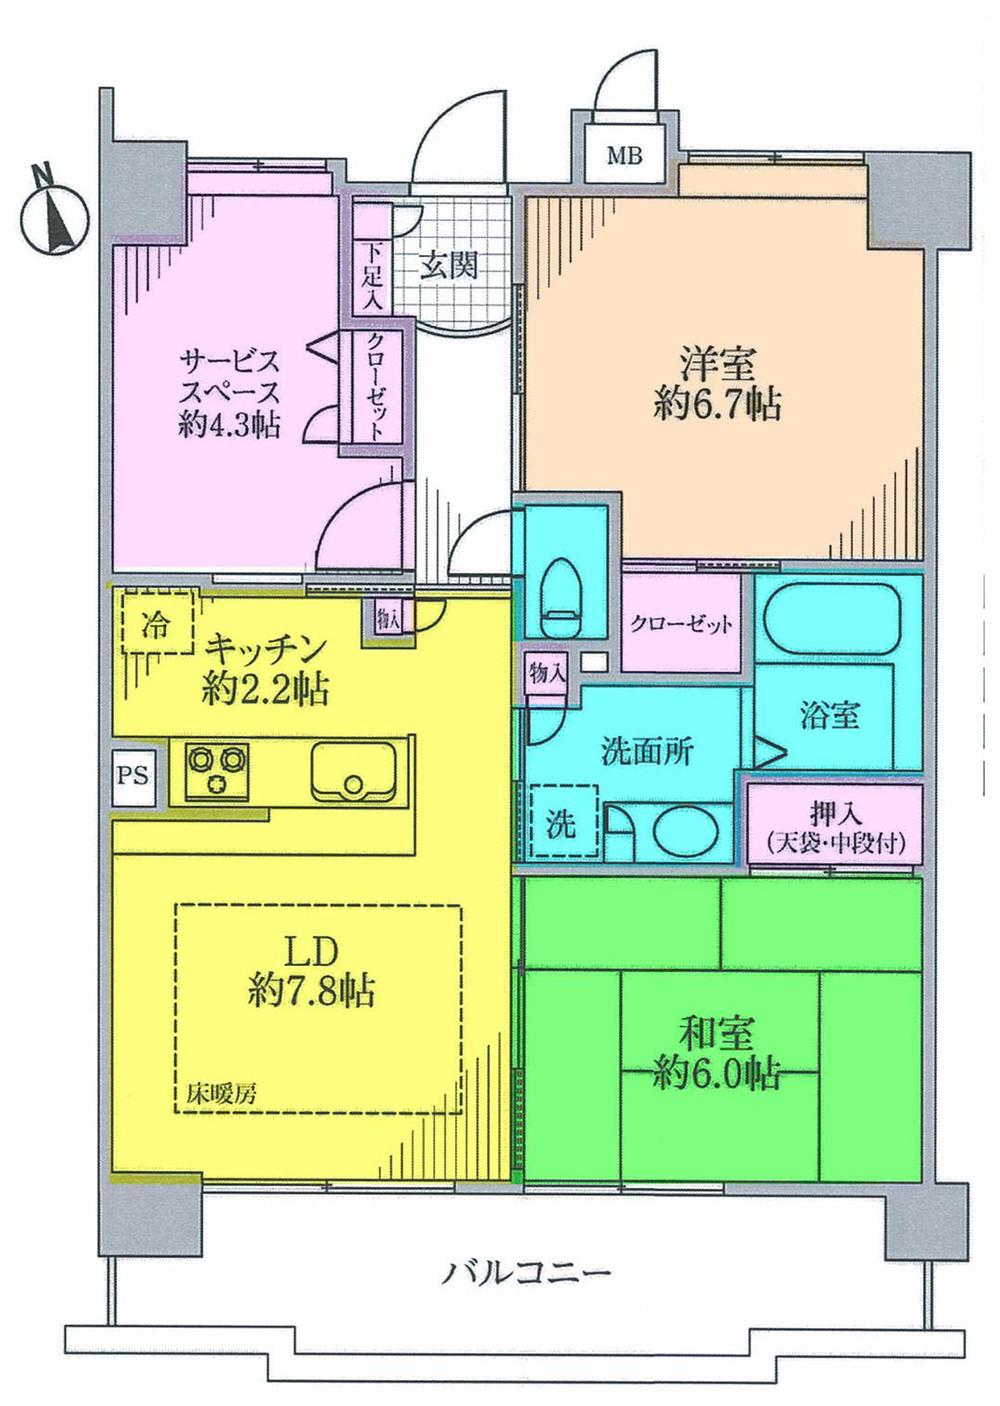 Floor plan. 2LDK + S (storeroom), Price 20,980,000 yen, Occupied area 63.51 sq m , Balcony area 11.08 sq m   ◆ Service Room is room available.